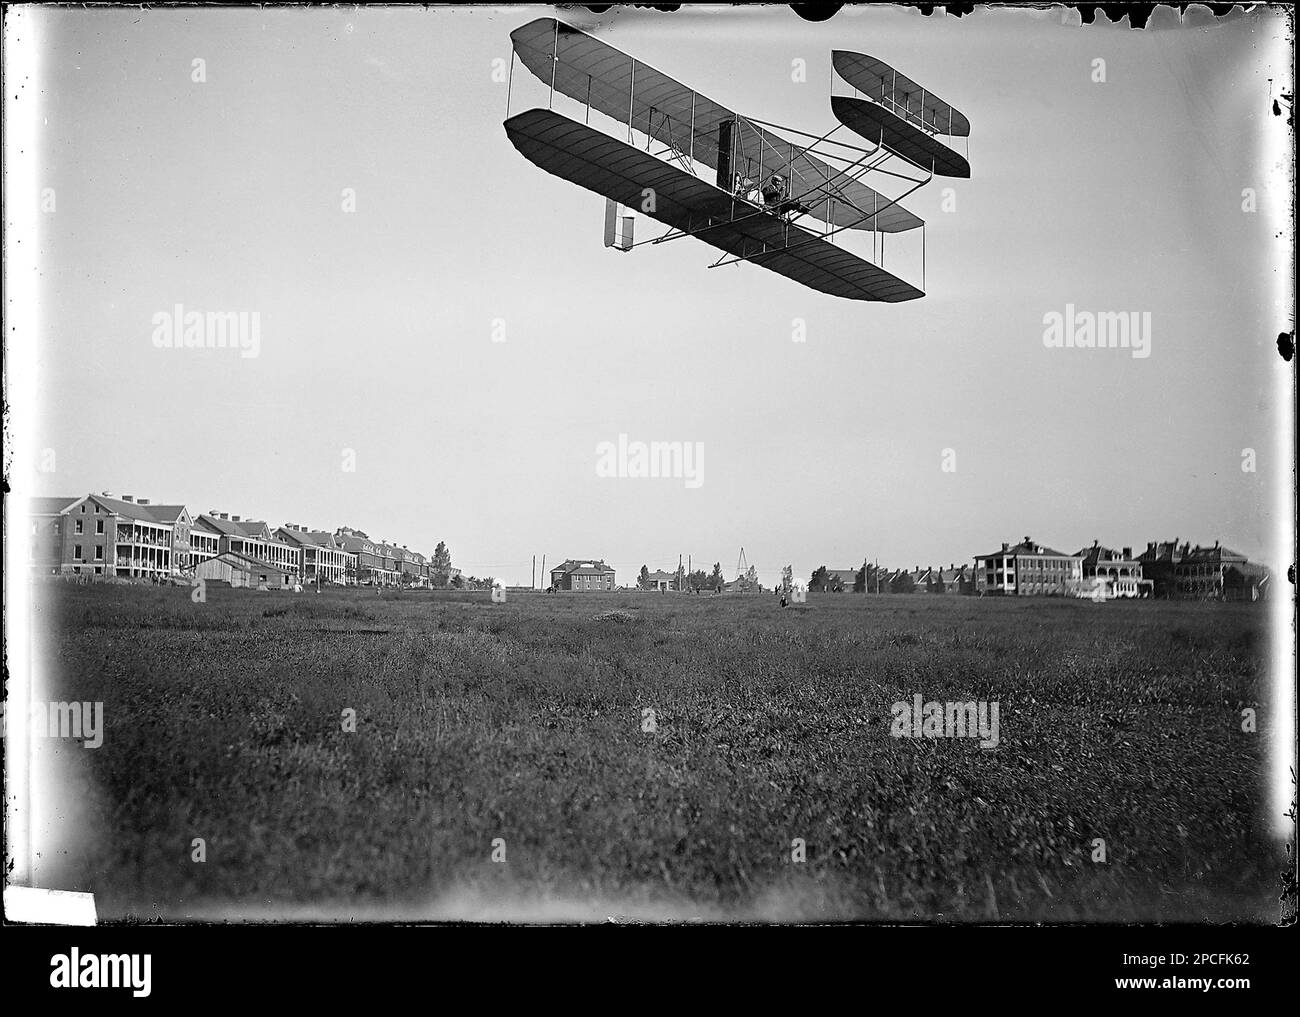 1908 , september, USA : The Wright Aeroplane , Ft. Myer, VA. Orville Wright ( Dayton, 1871 - 1948 ) in plane . -   - VOLO - FLY - PIONIERI DELL' AVIAZIONE - AEROPLANO MONOPOSTO - PLANE - BIPLANE - BIPLANO - FOTO STORICHE - HISTORY - HISTORICAL - RECORD  - AVIATORE - AVIAZIONE - AVIATOR - AVIATION - FRATELLI WRIGHT - VOLO - FLY -----  Archivio GBB Stock Photo